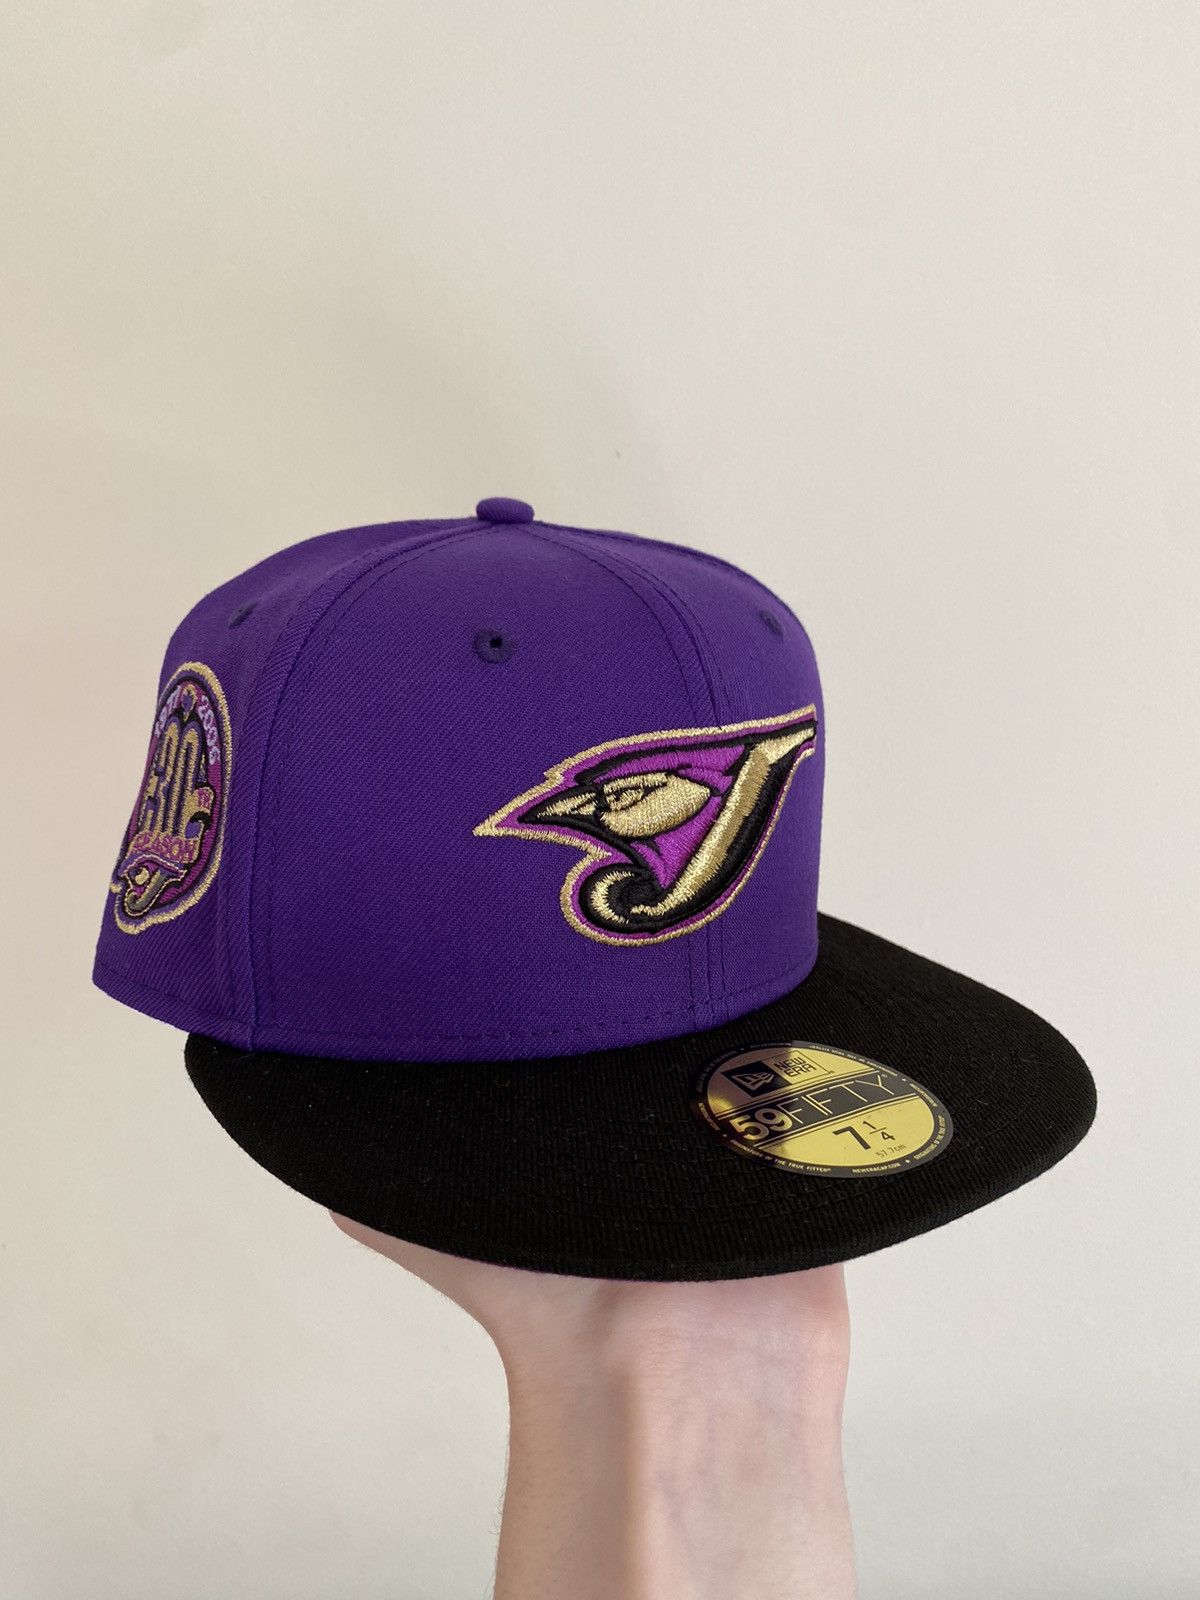 Lids Toronto Blue Jays New Era Retro 59FIFTY Fitted Hat - Stone/Royal